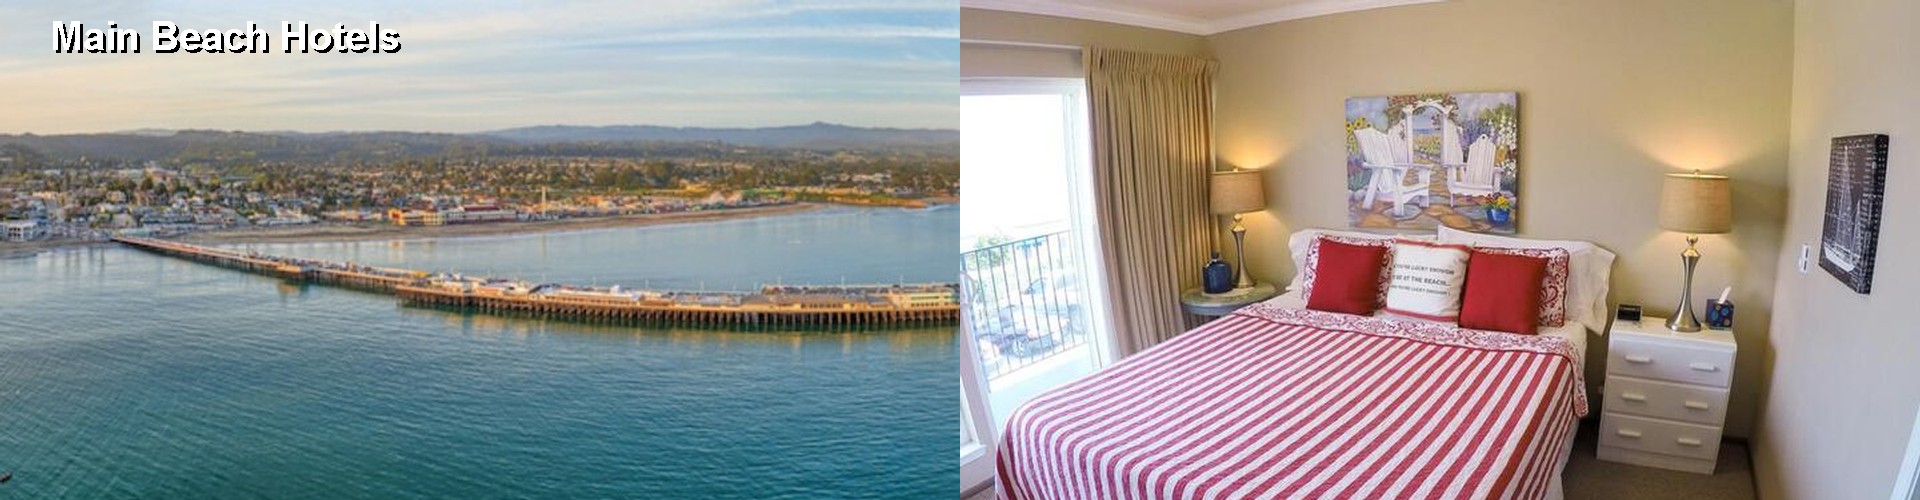 4 Best Hotels near Main Beach